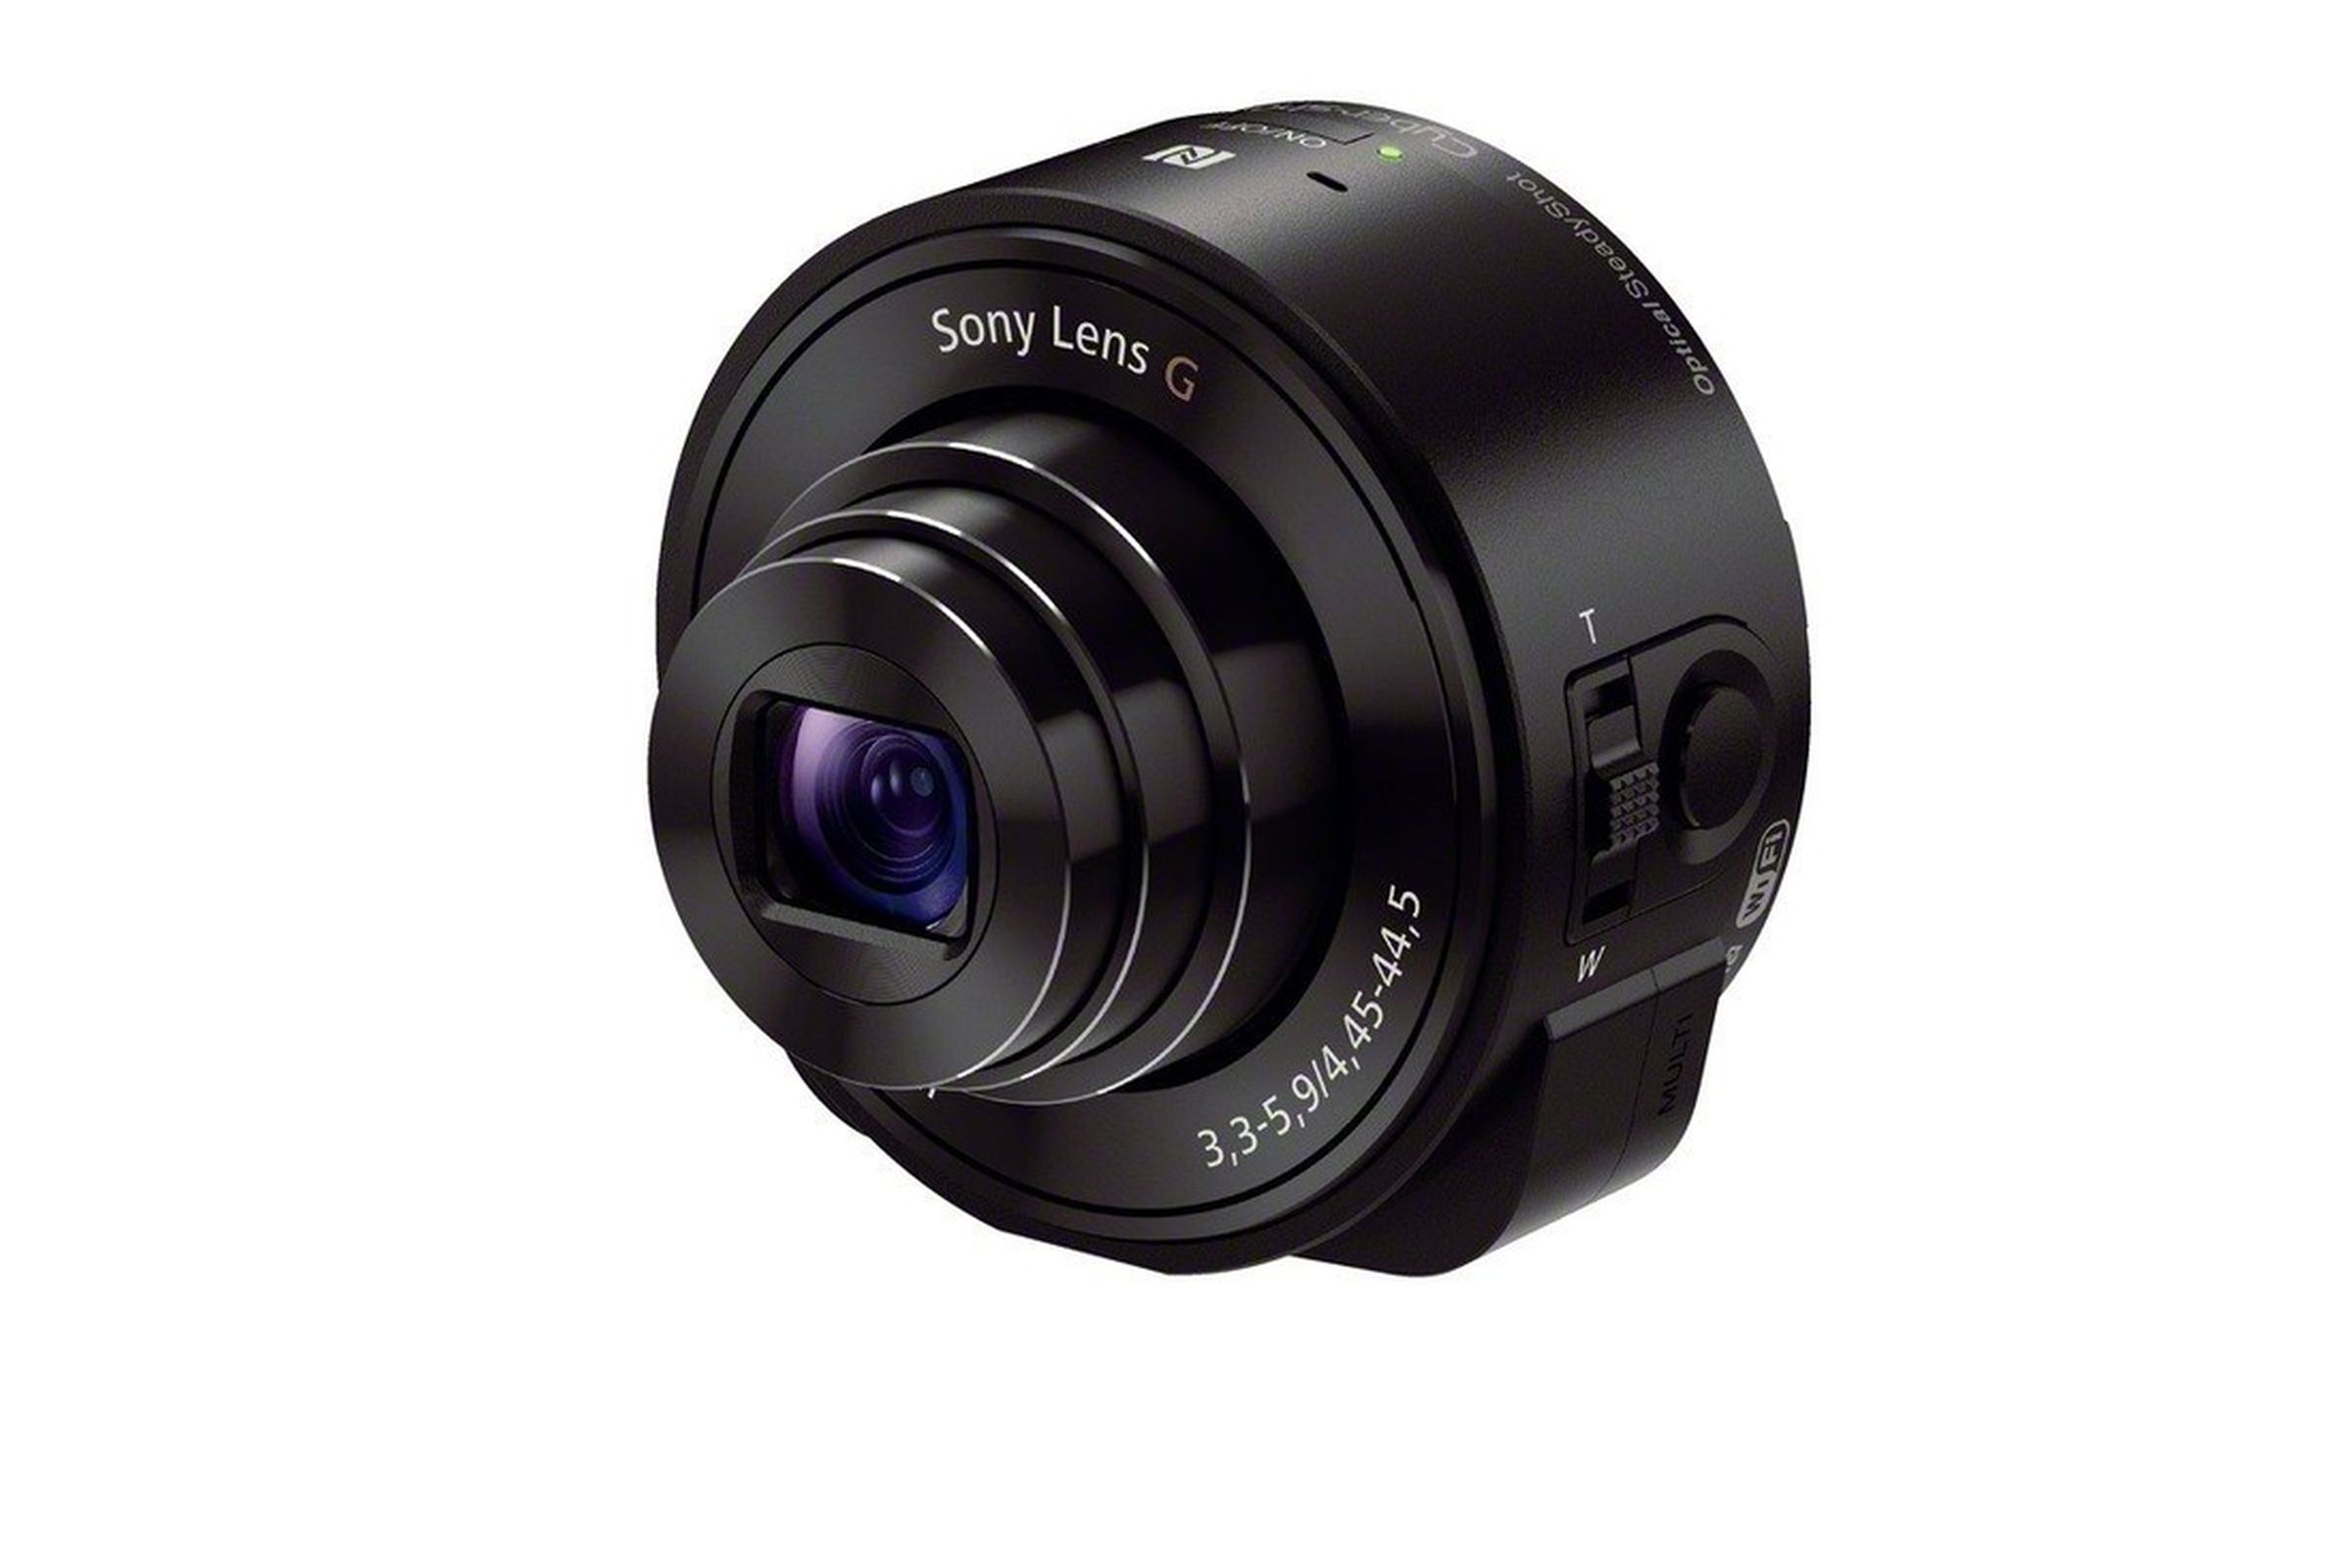 Sony QX10 smart lens